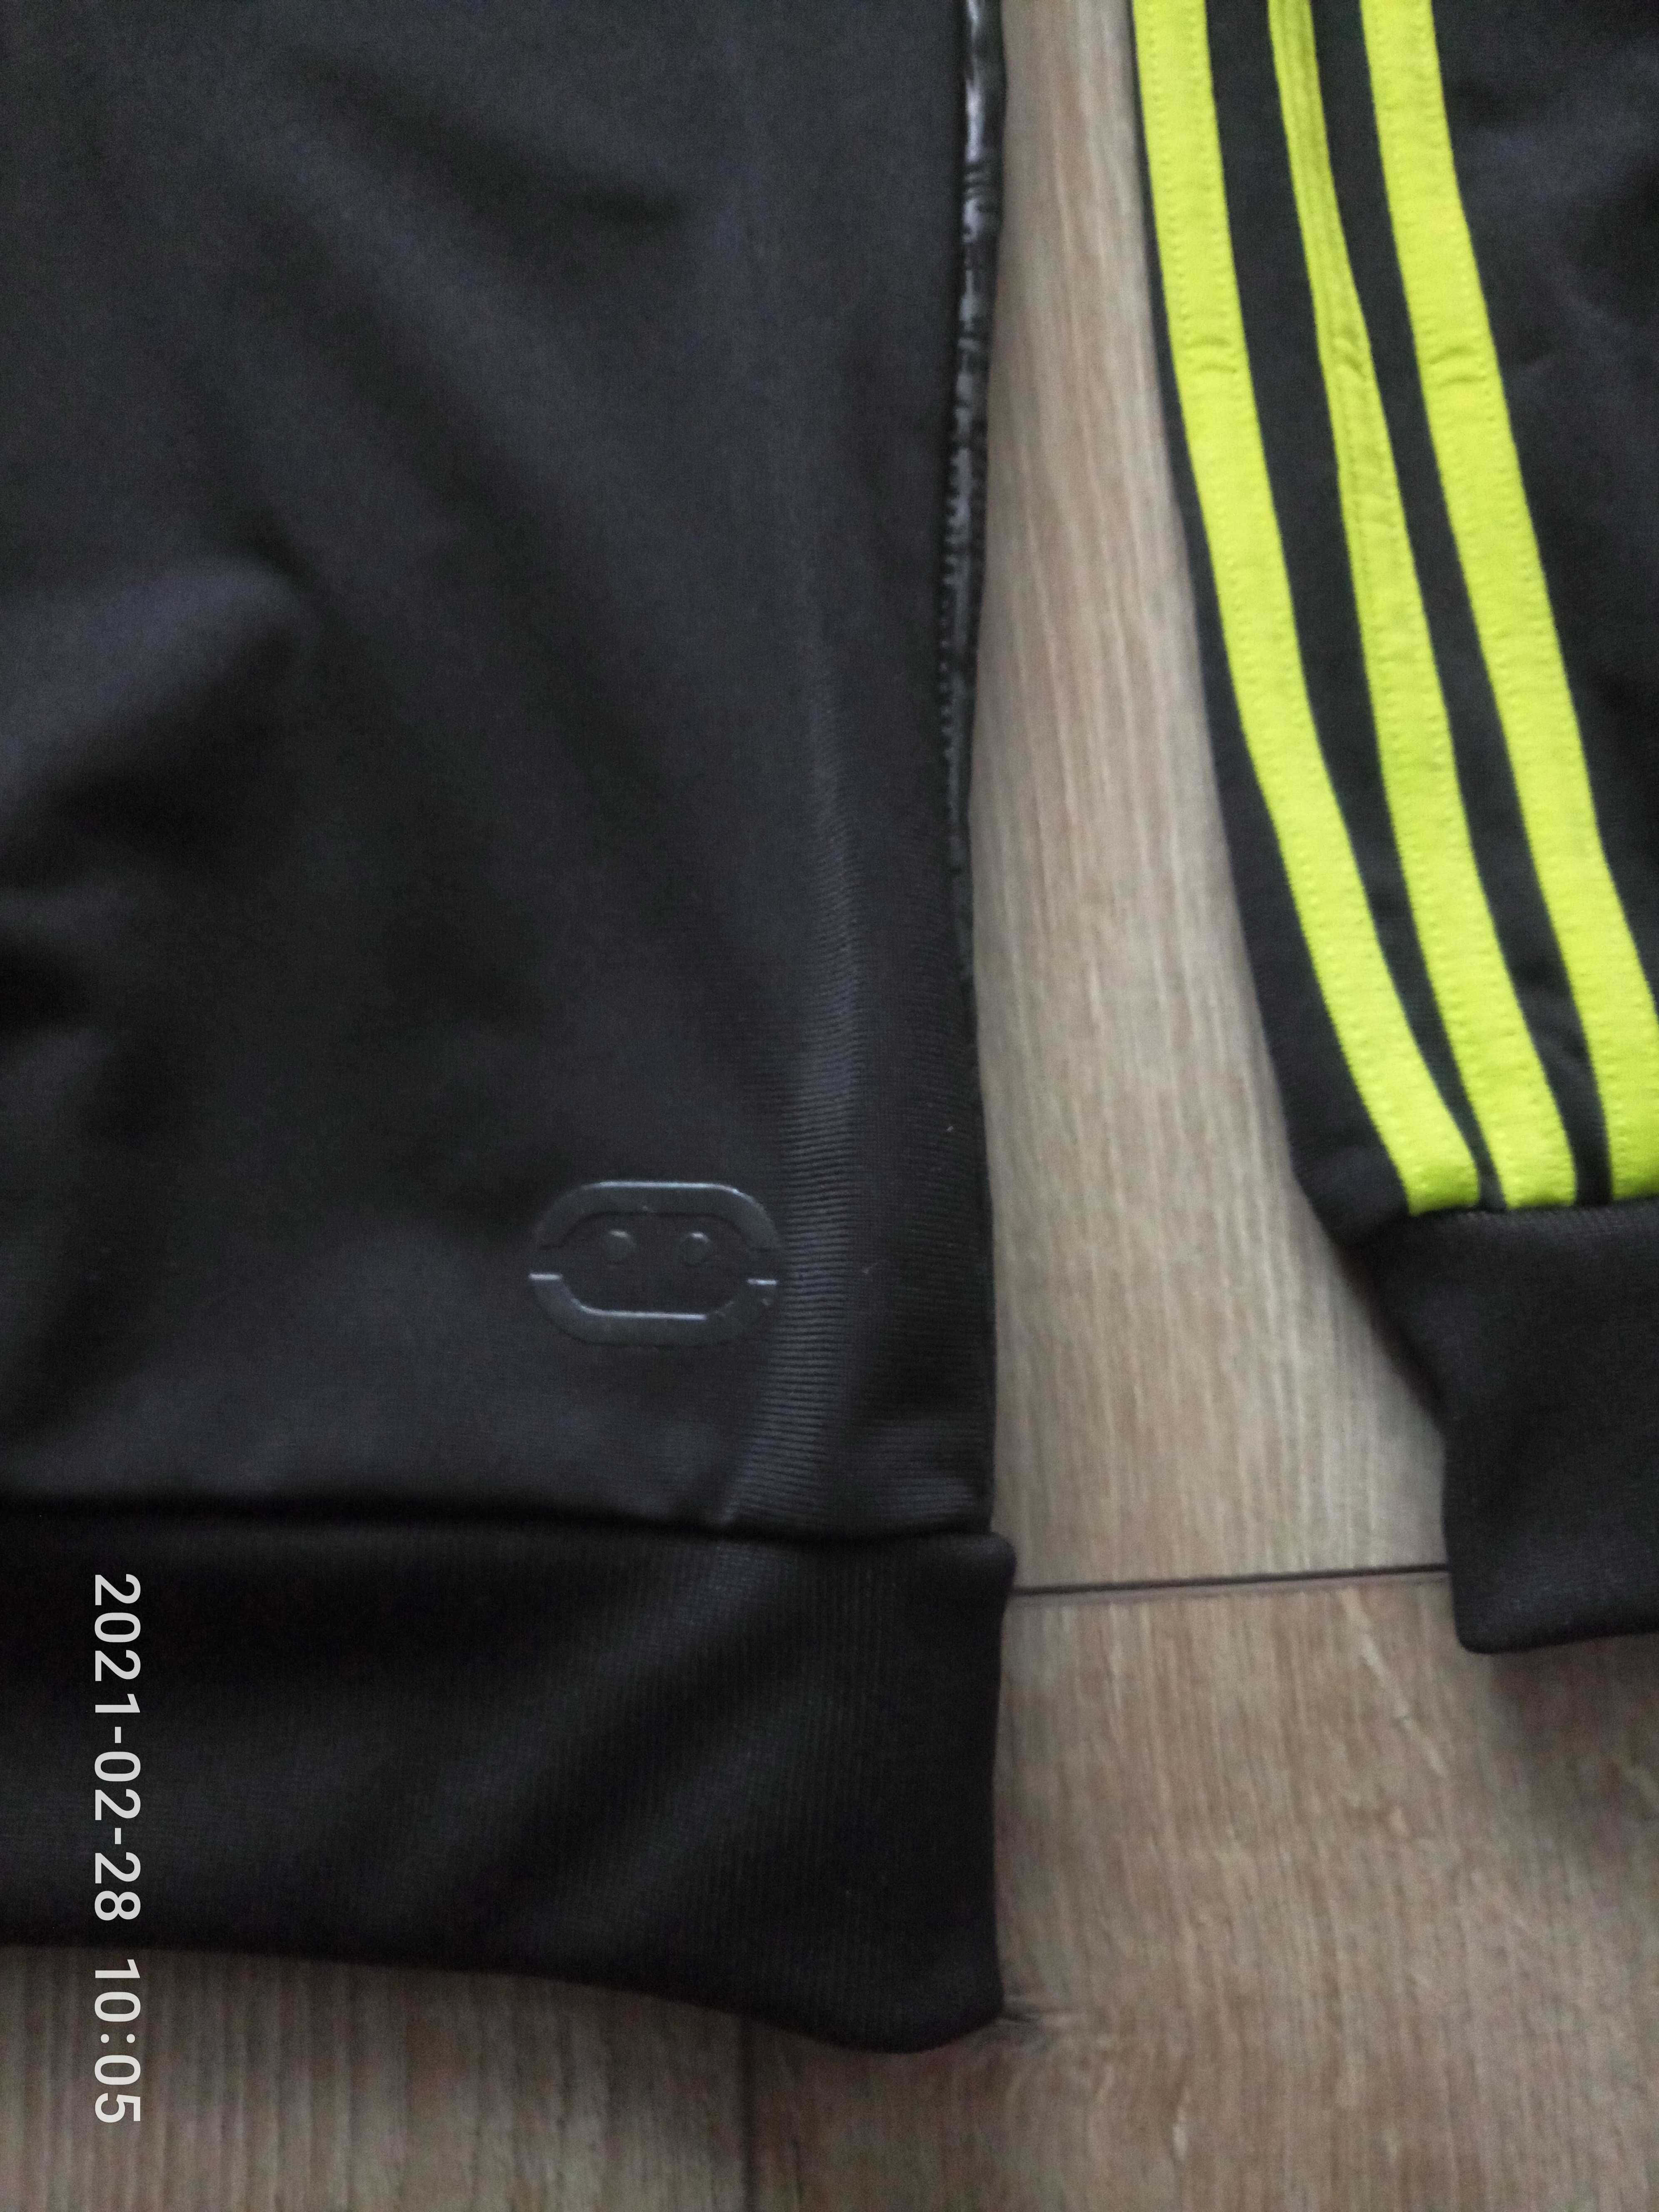 Adidas оригинал олимпийка XL 56-58 черного  цвета, новая